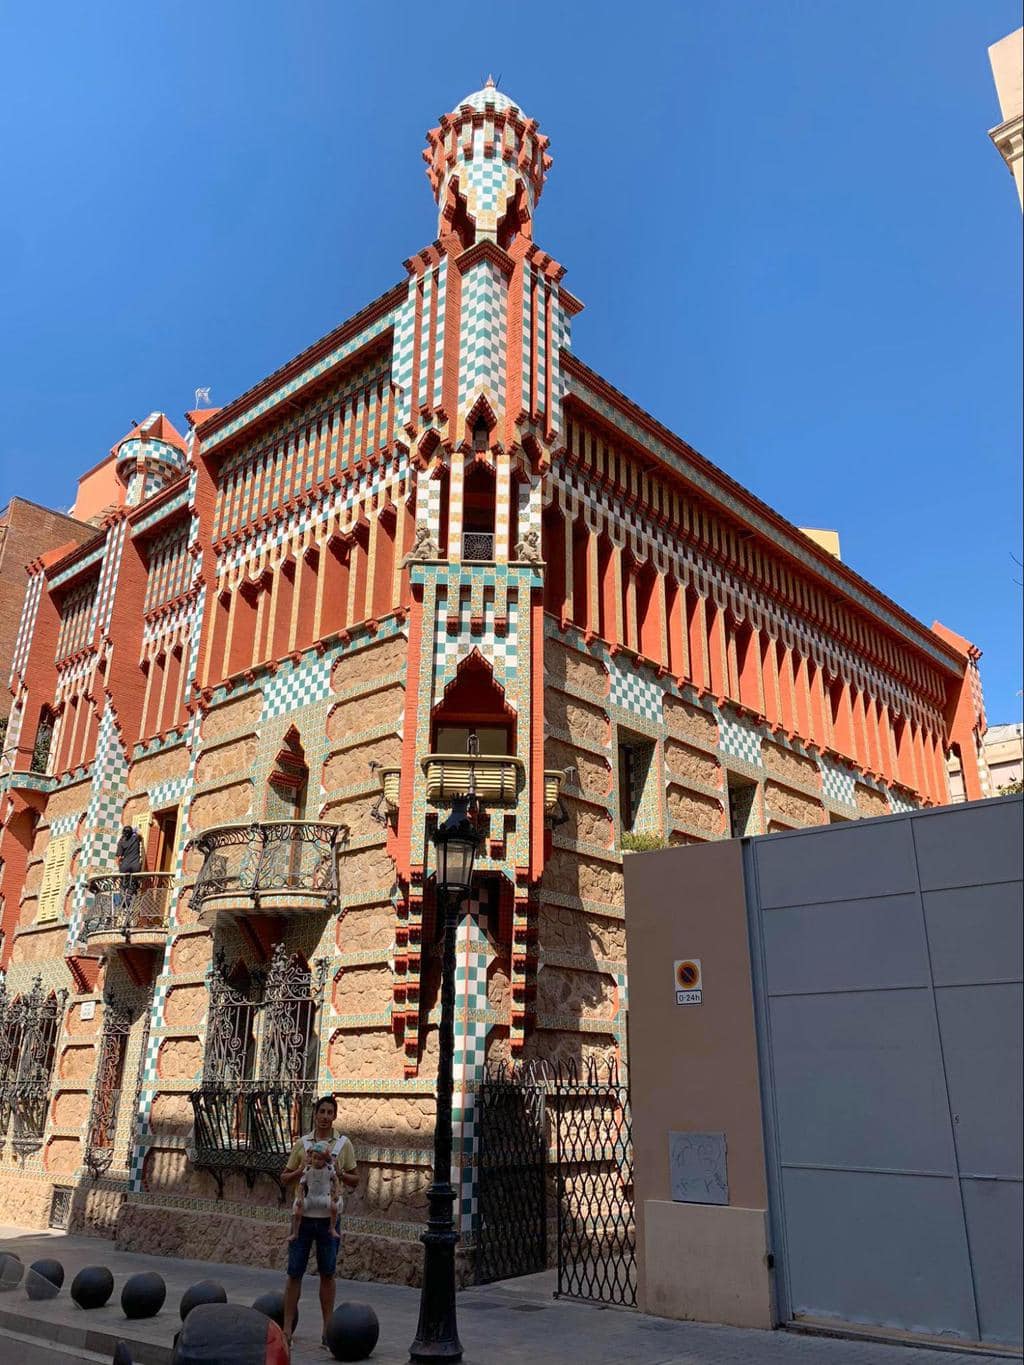 Gaudi’s first work, Casa Vicens